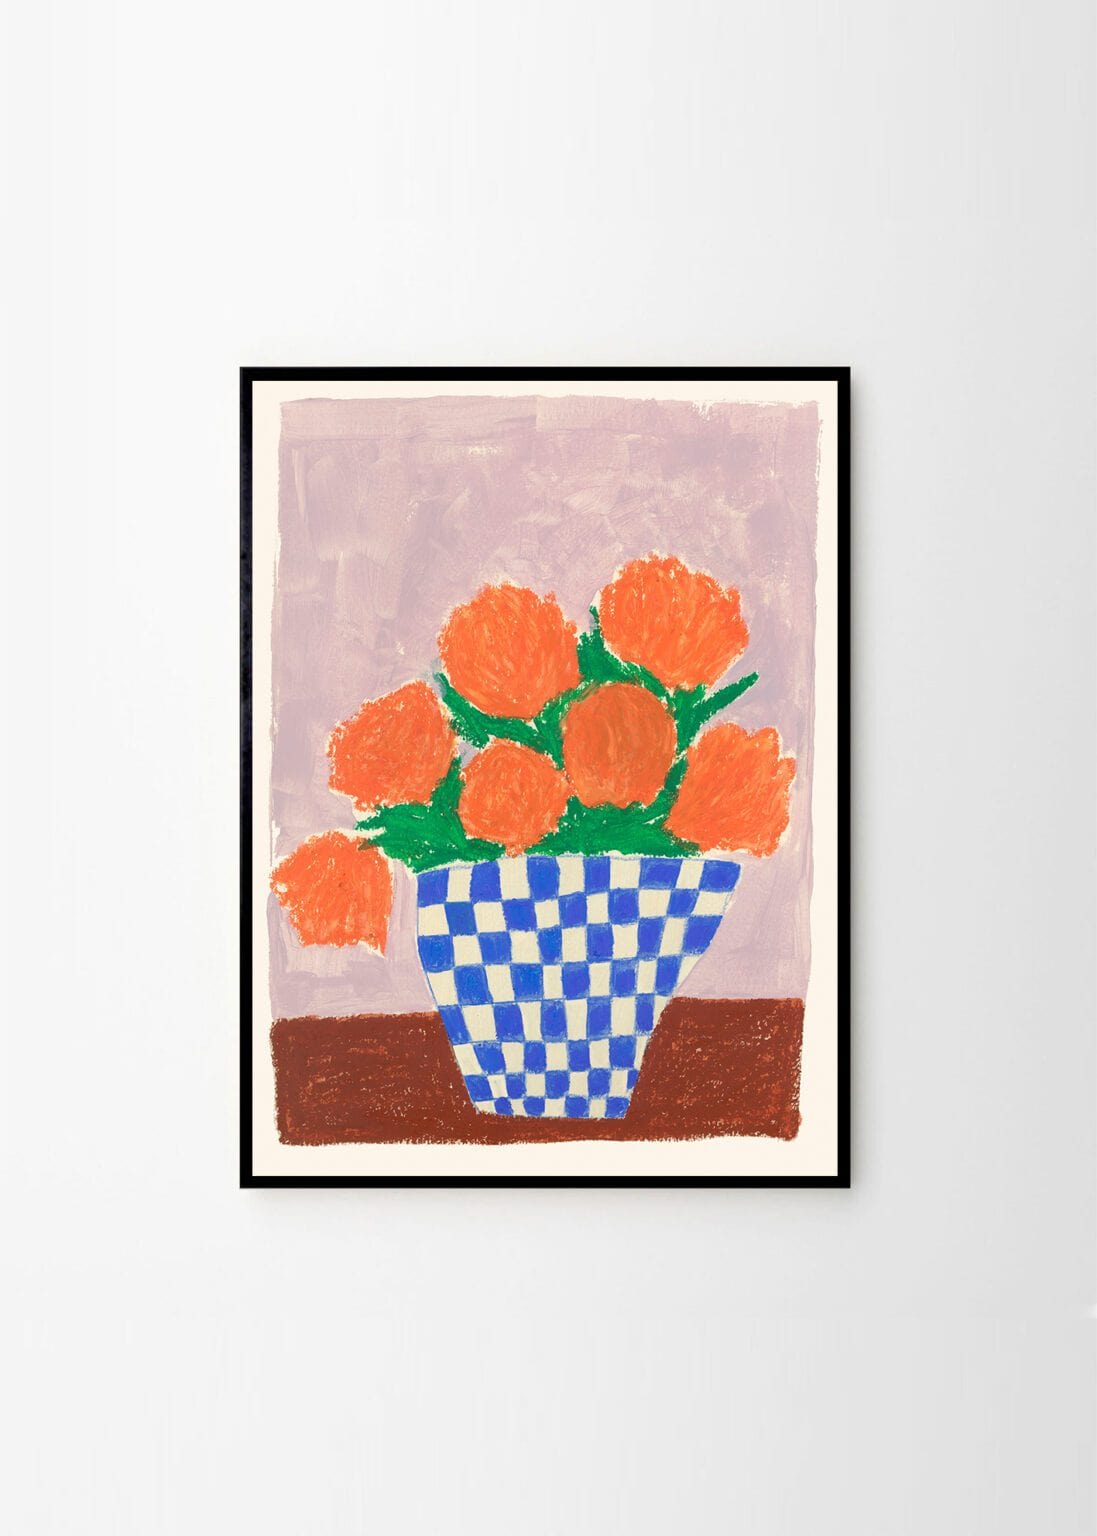 THE POSTER CLUB Poster Πόστερ, Orange Flowers, Carla Llanos, (30x40) cm, Πορτοκαλί/Μπλε, Sustainable Paper,THE POSTER CLUB